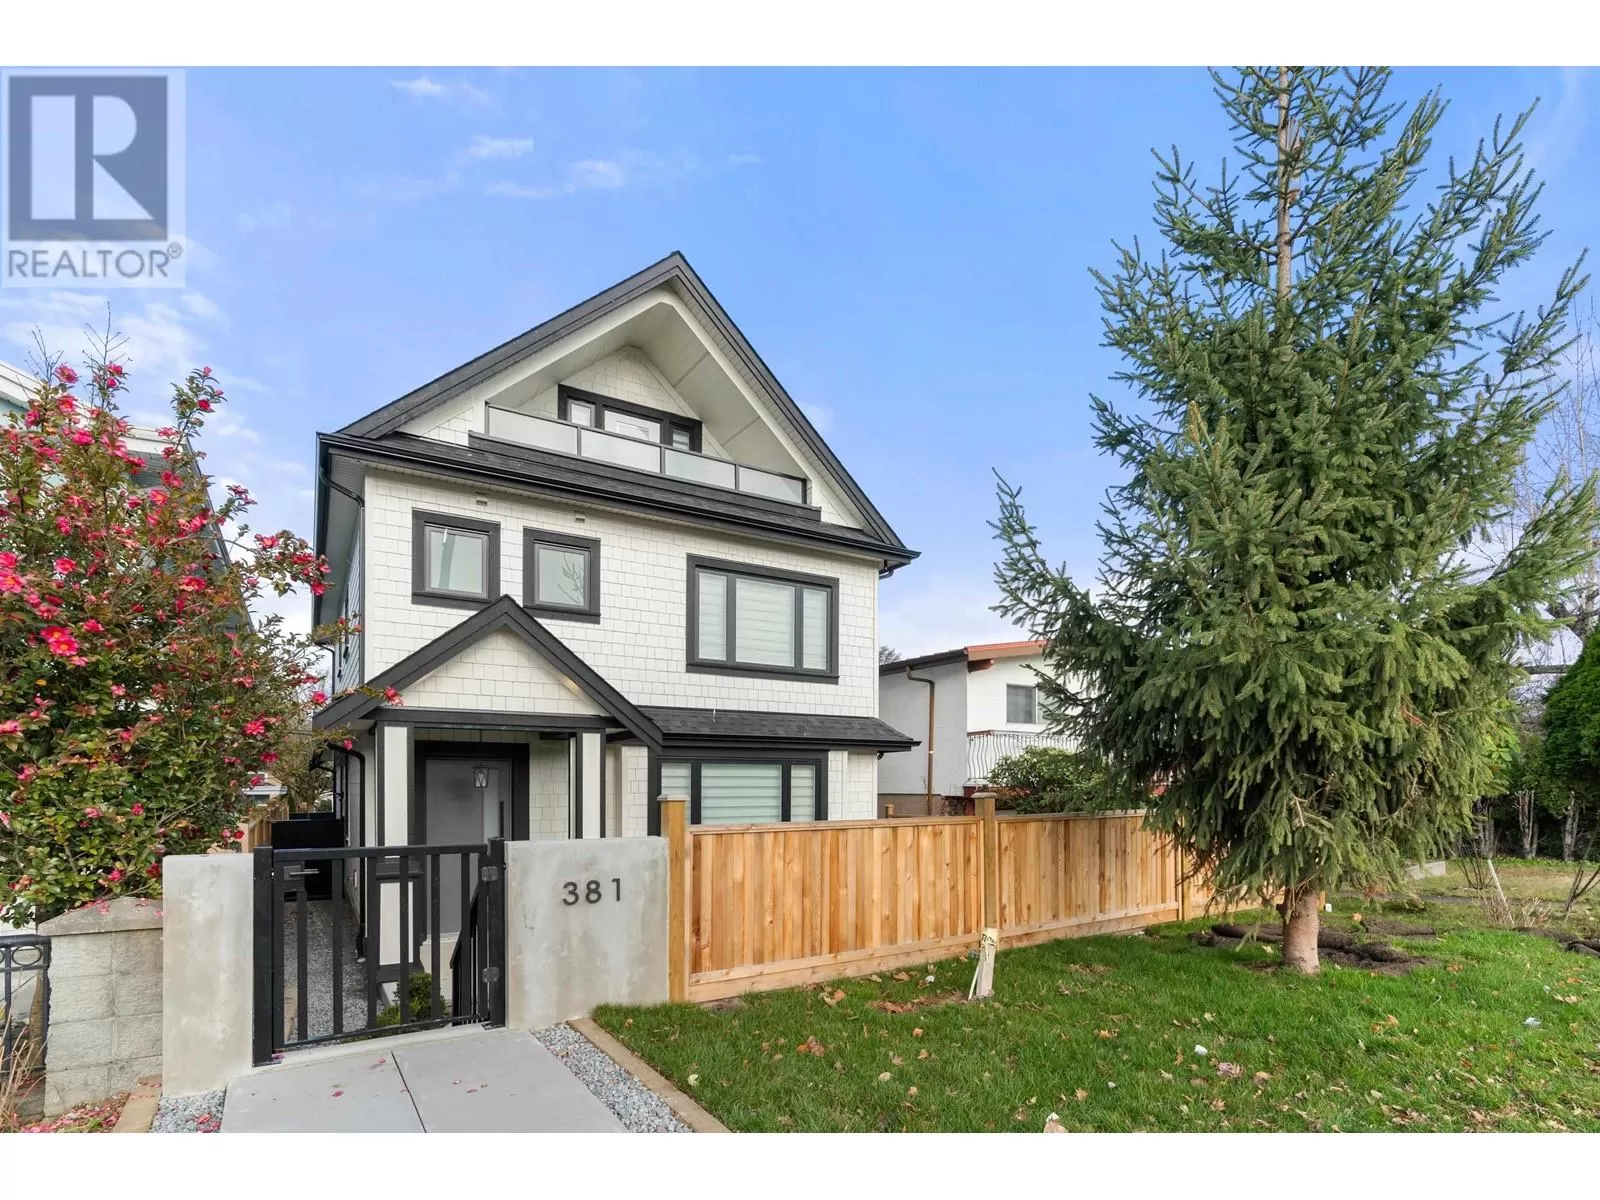 Duplex for rent: 381 E 41st Avenue, Vancouver, British Columbia V5W 1N9